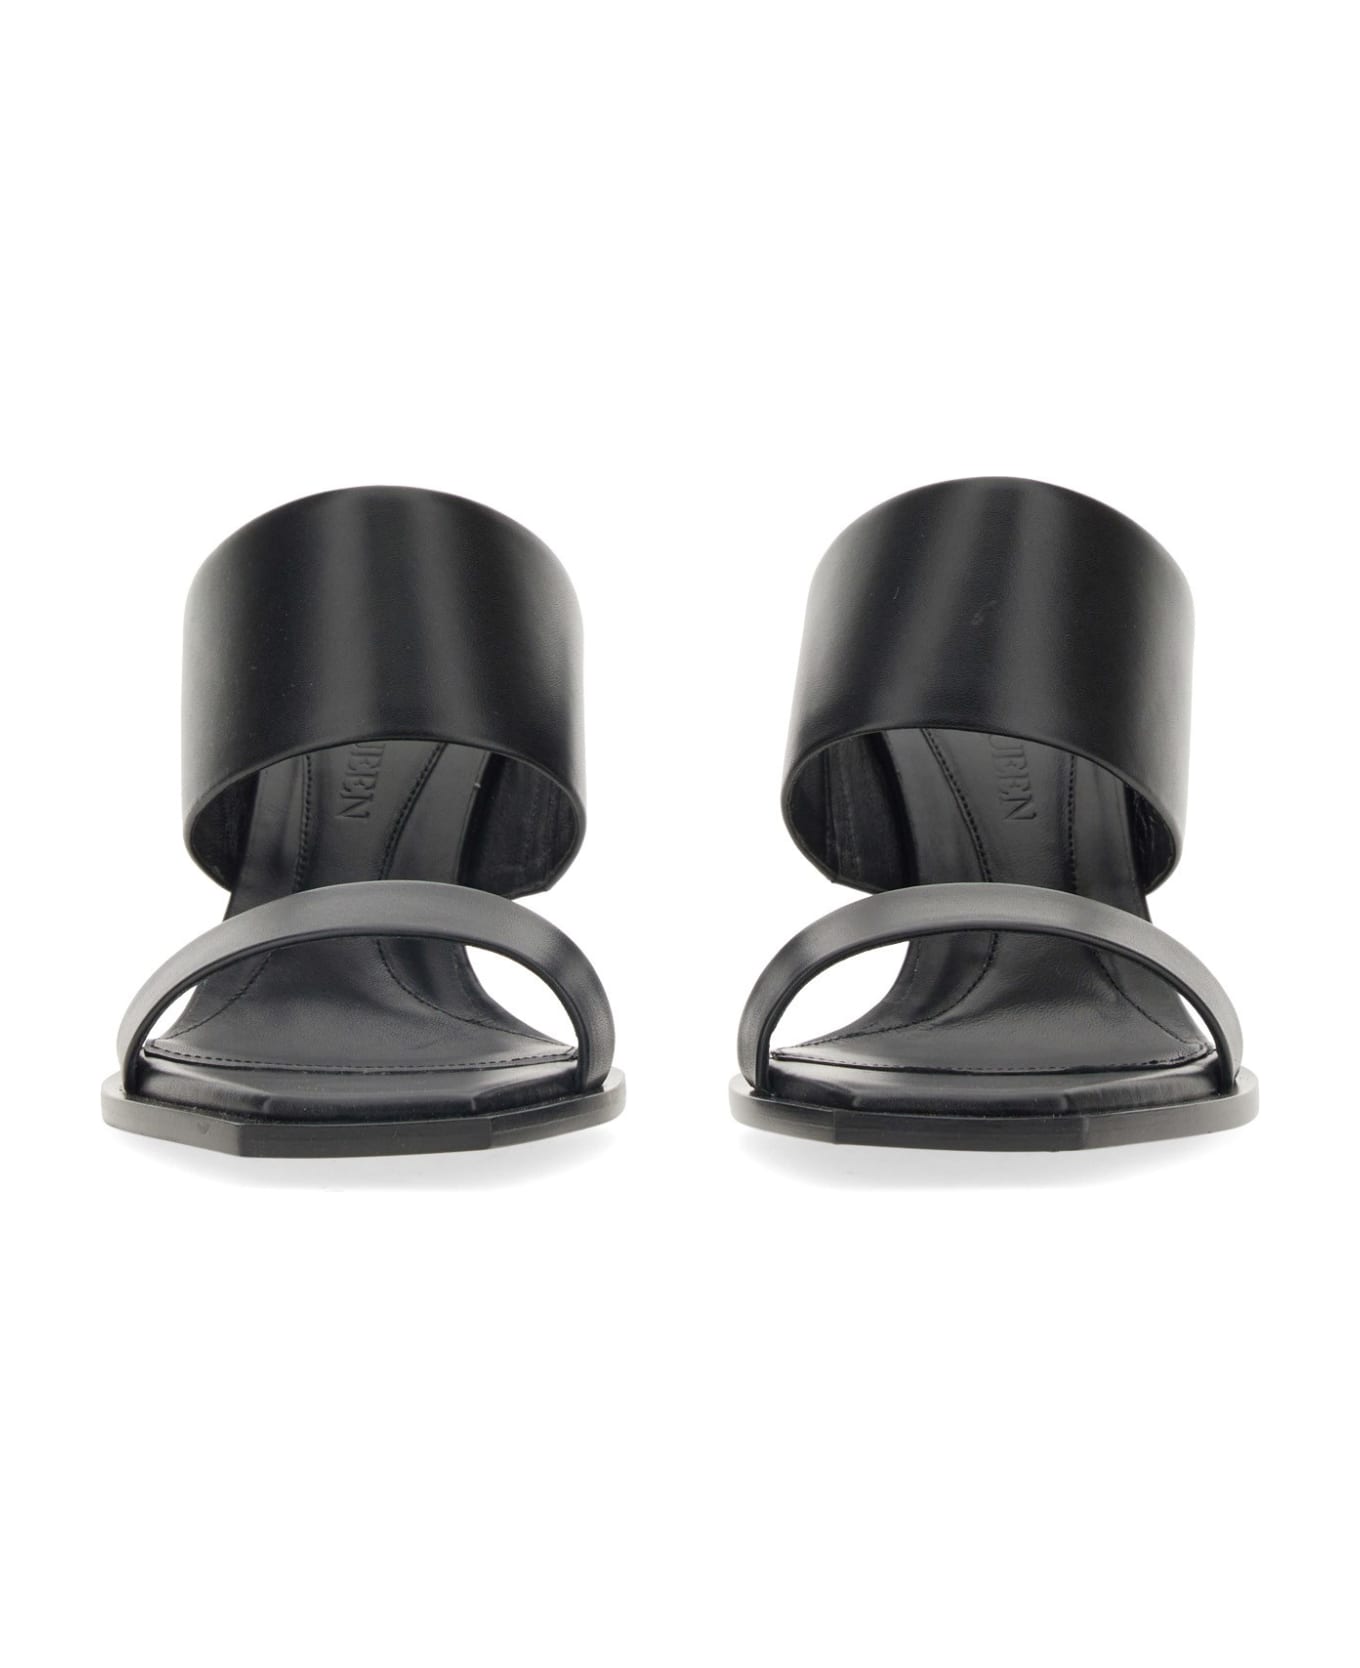 Alexander McQueen Leather Sandal - Black サンダル